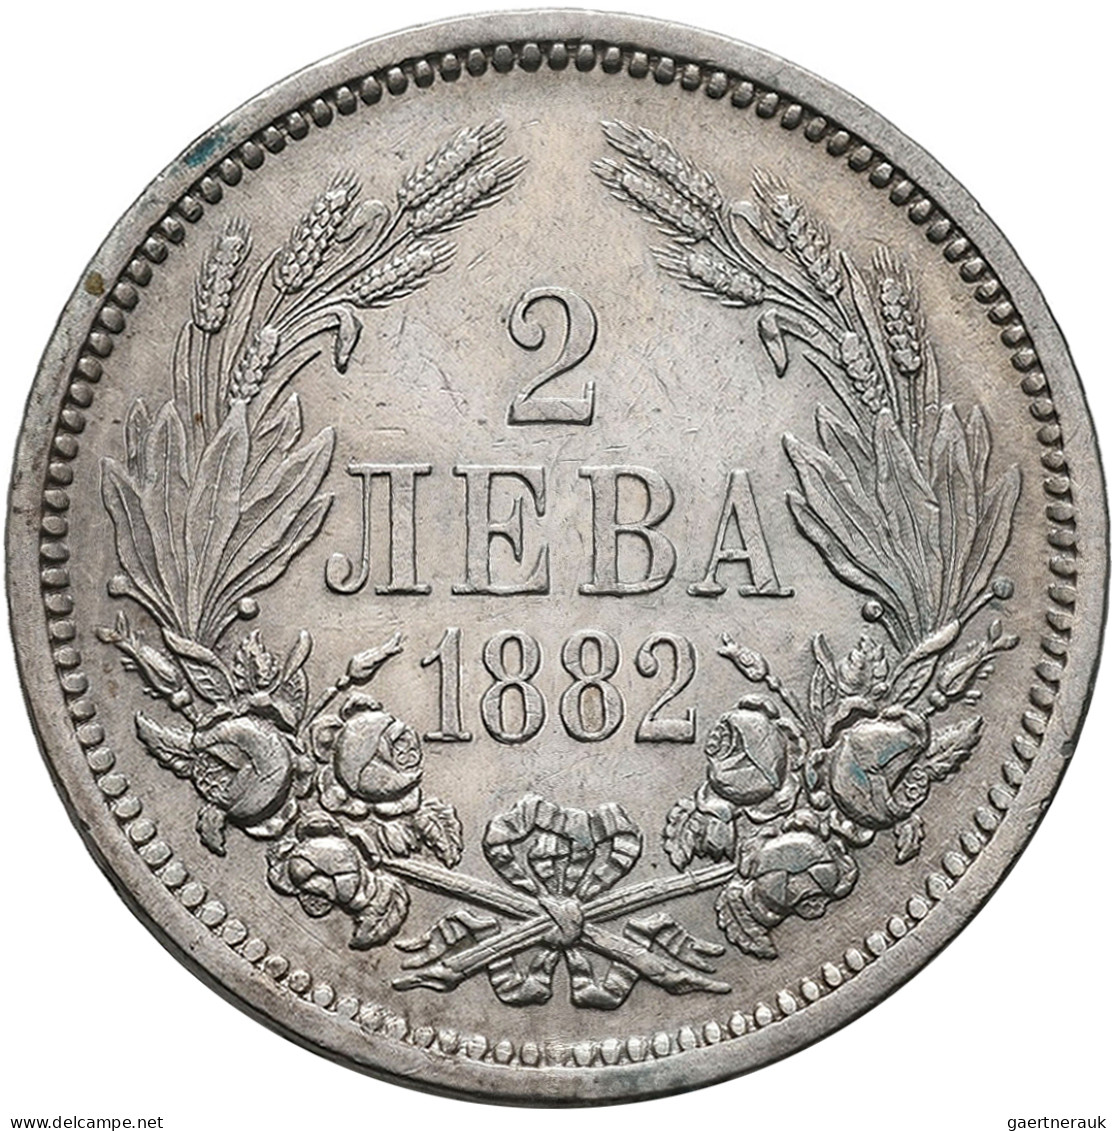 Bulgarien: Alexander I. 1879-1886: 2 Leva 1882, KM# 5, Fast Vorzüglich. - Bulgaria